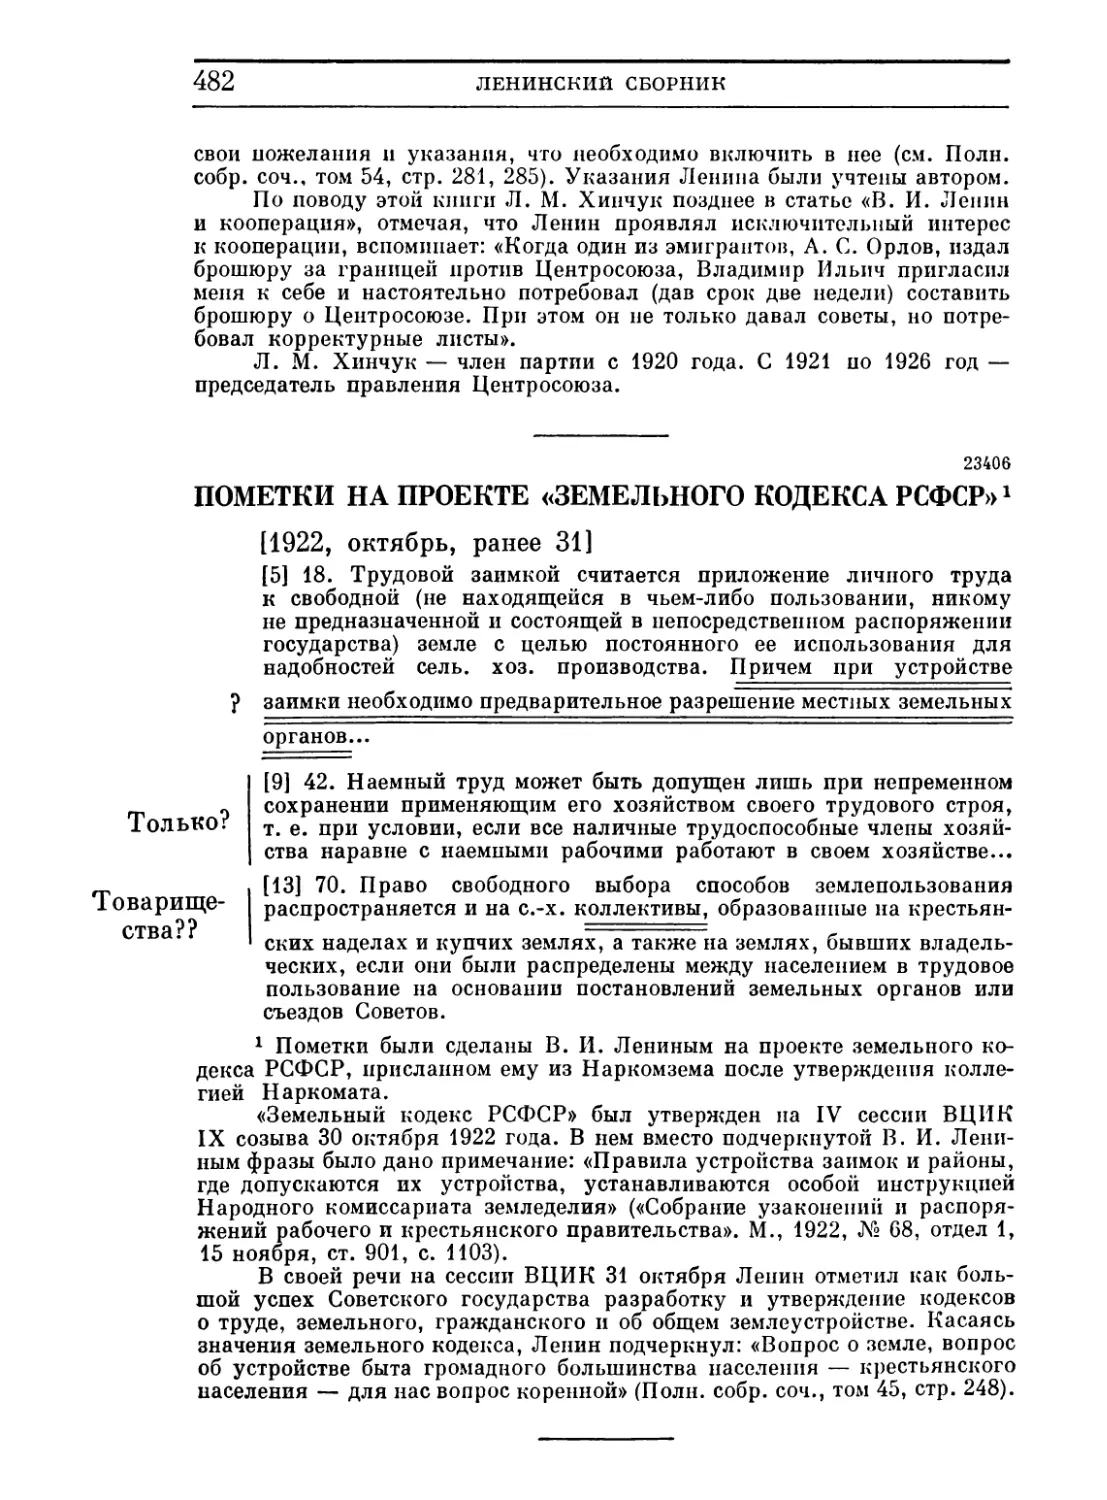 Пометки на проекте «Земельного кодекса РСФСР». Ранее 31 октября 1922